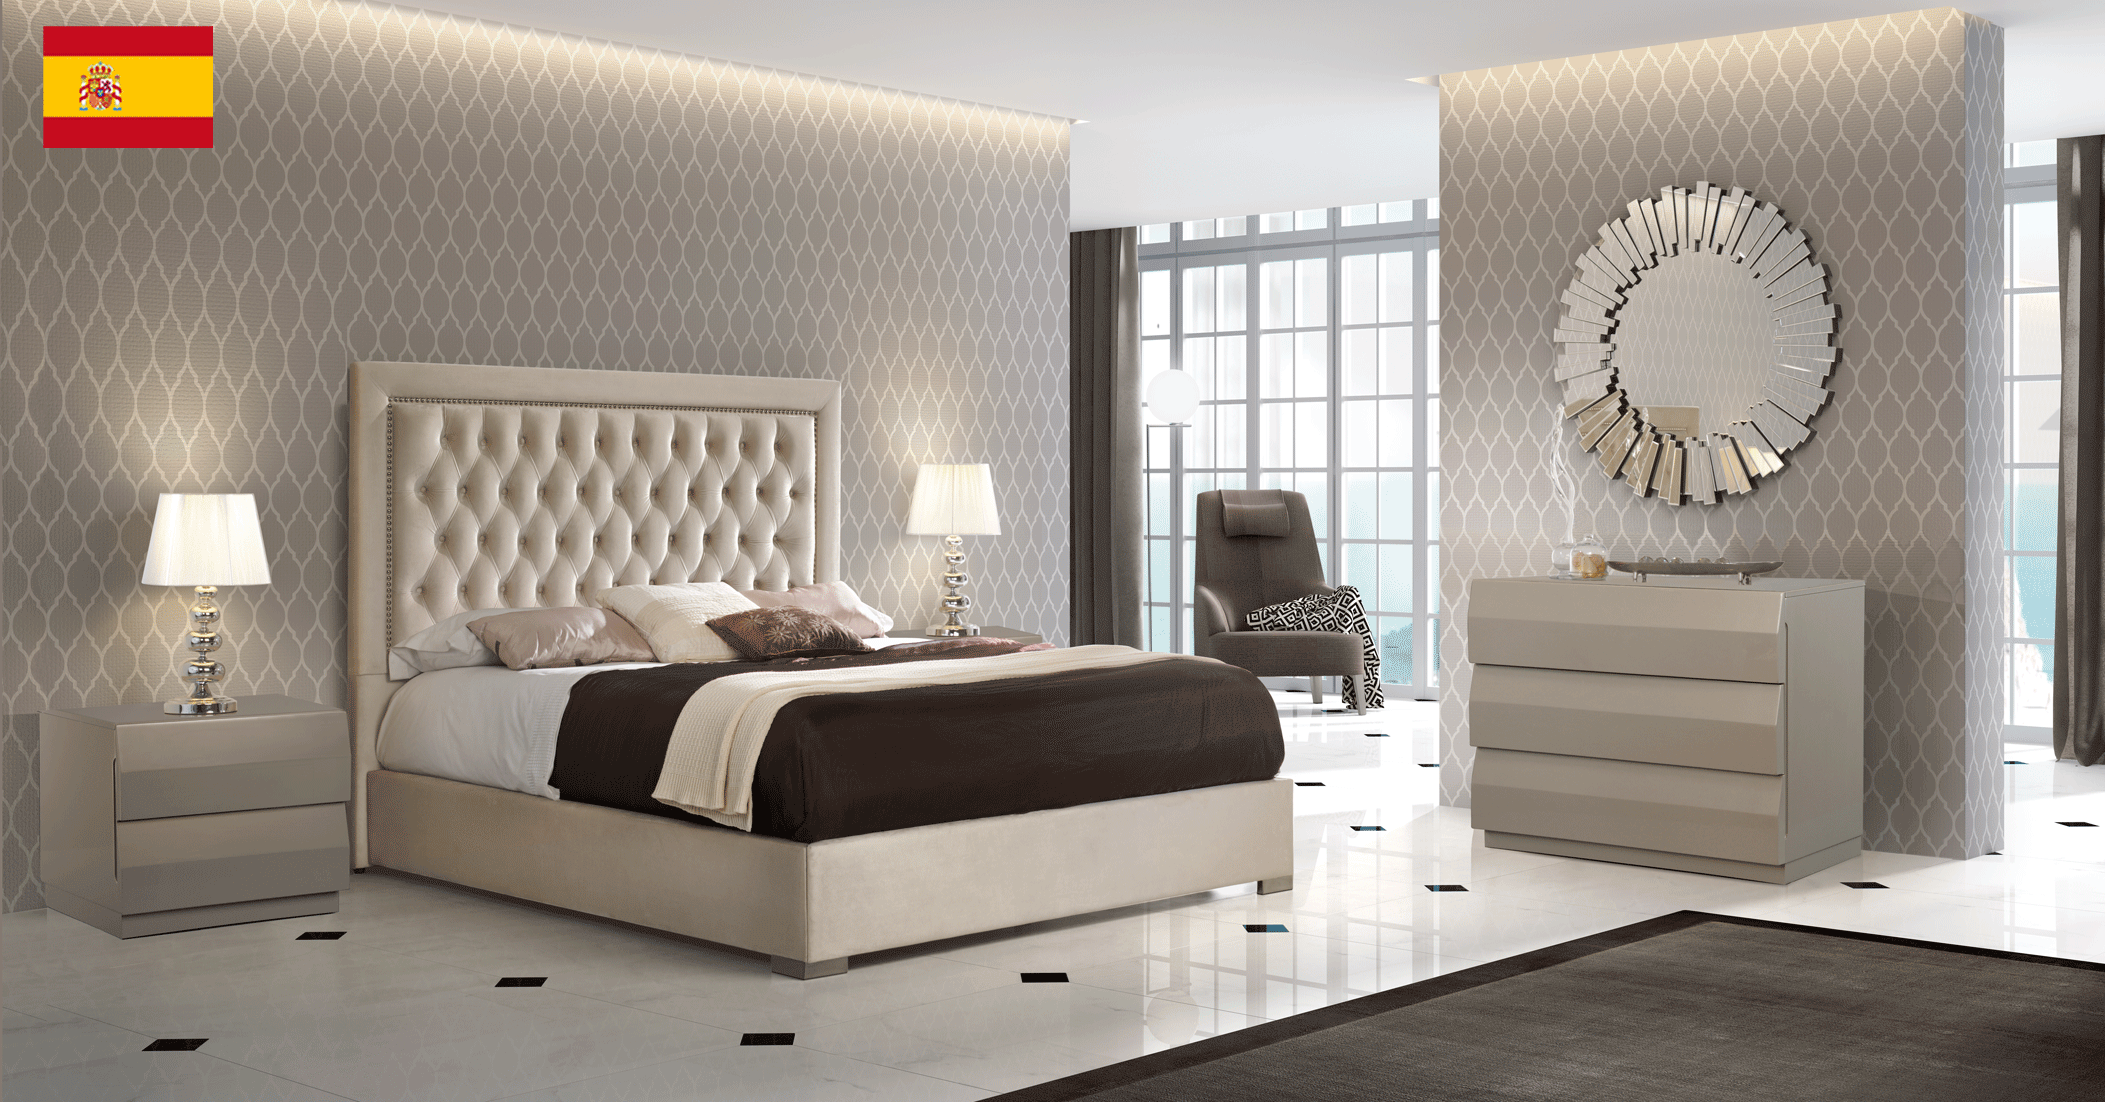 Bedroom Furniture Mirrors Adagio Bedroom w/Storage, M152, C152, E100